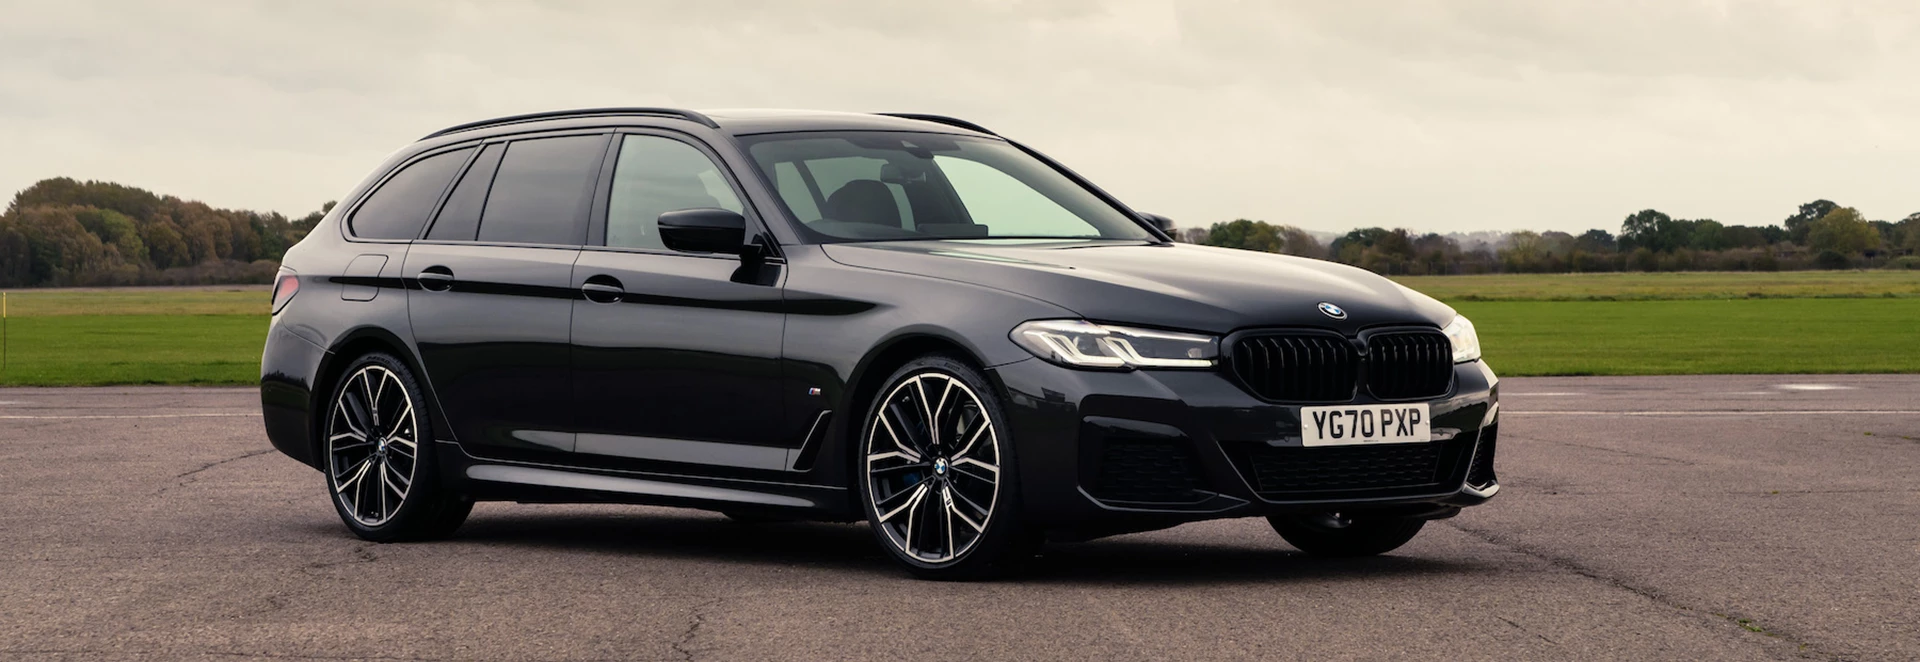 BMW launches new company car loyalty scheme 